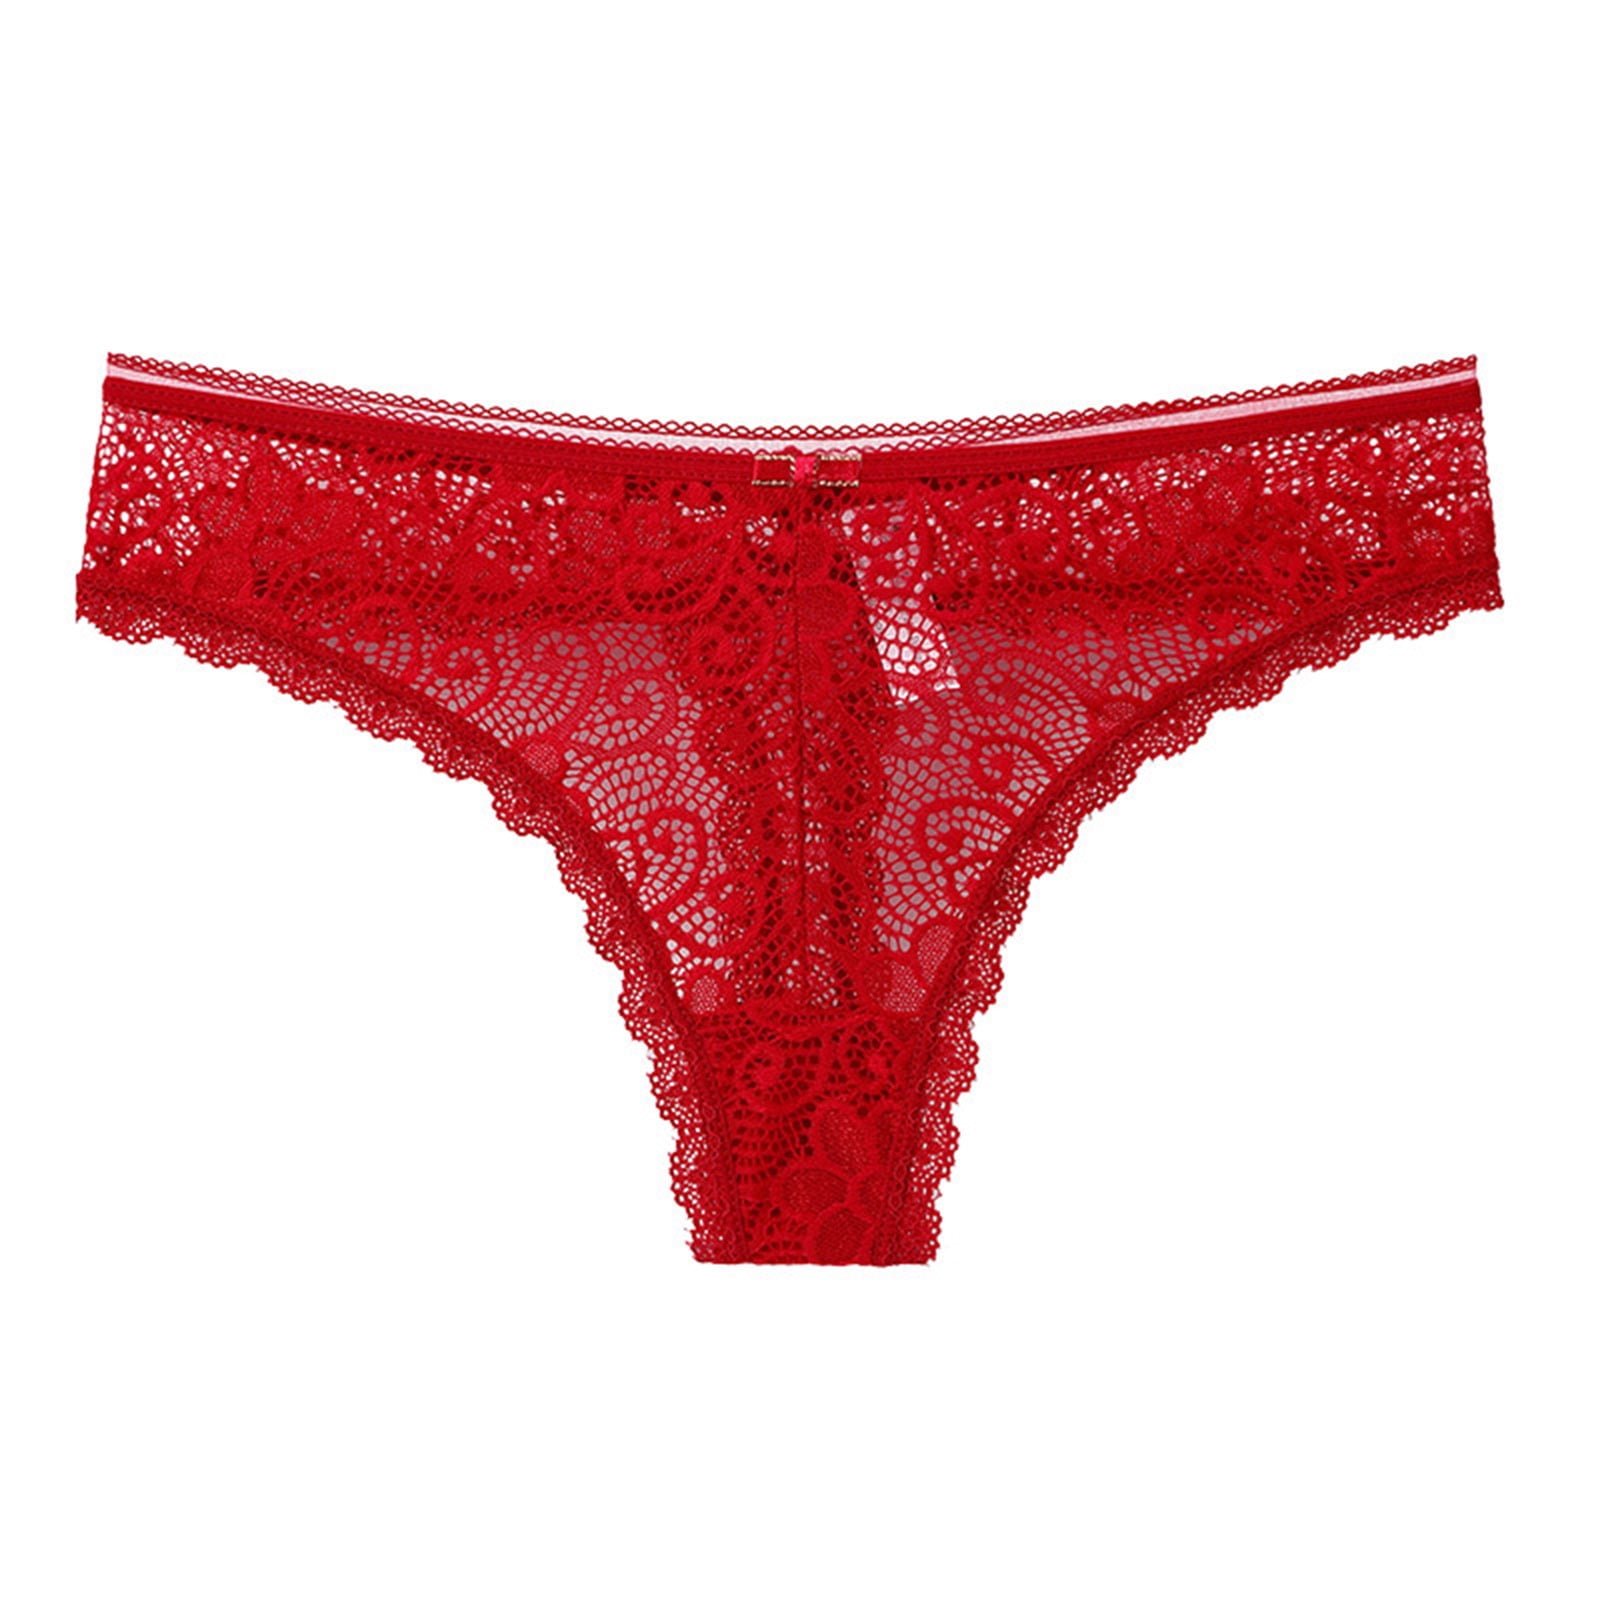 Efsteb Womens Lace Underwear Low Waist Briefs Lingerie Transparent